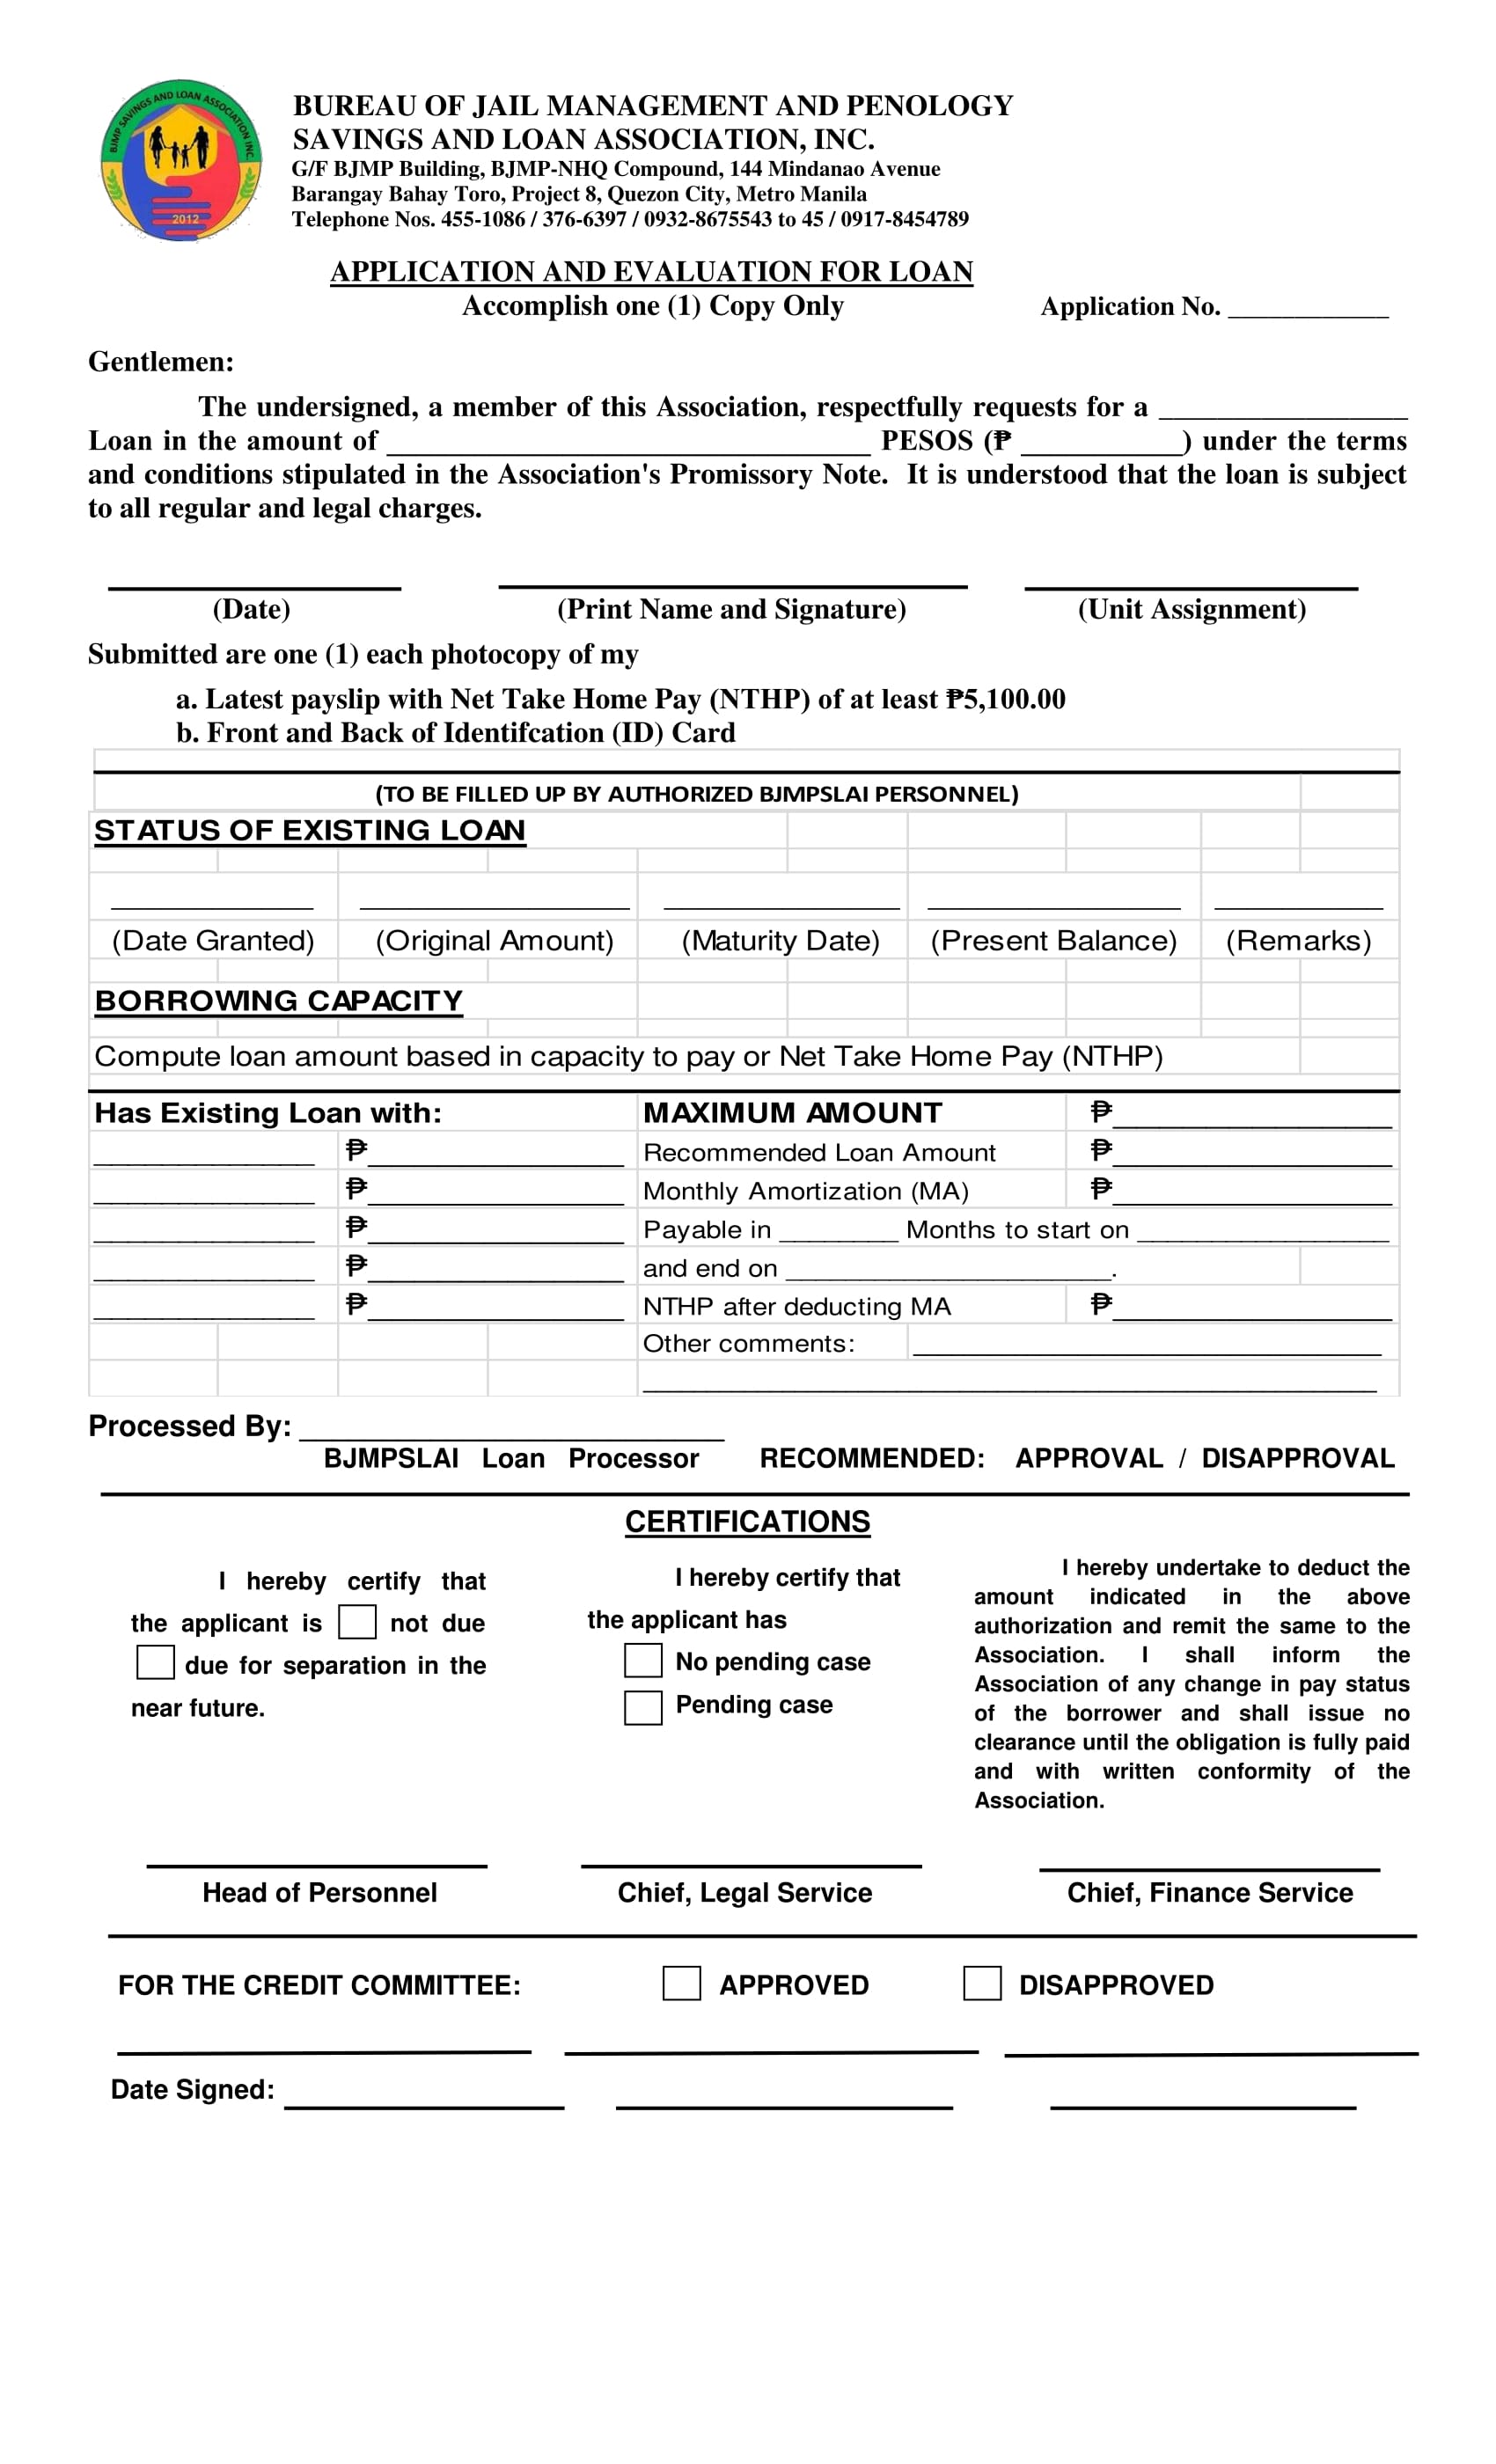 loan application evaluation form 1